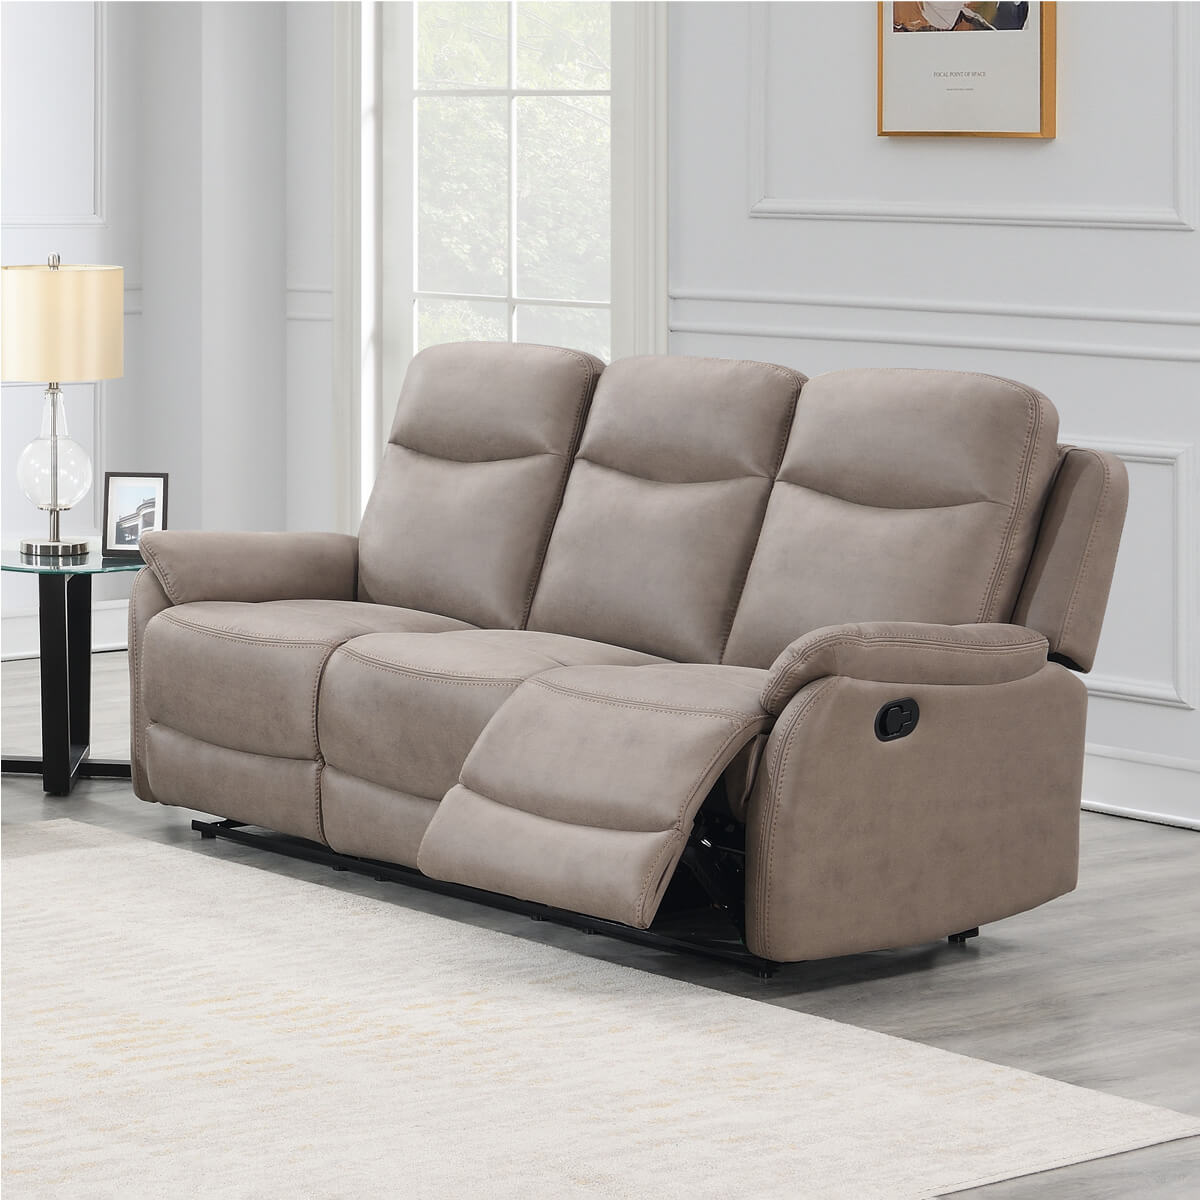 Evander 3 Seater Sofa – Taupe